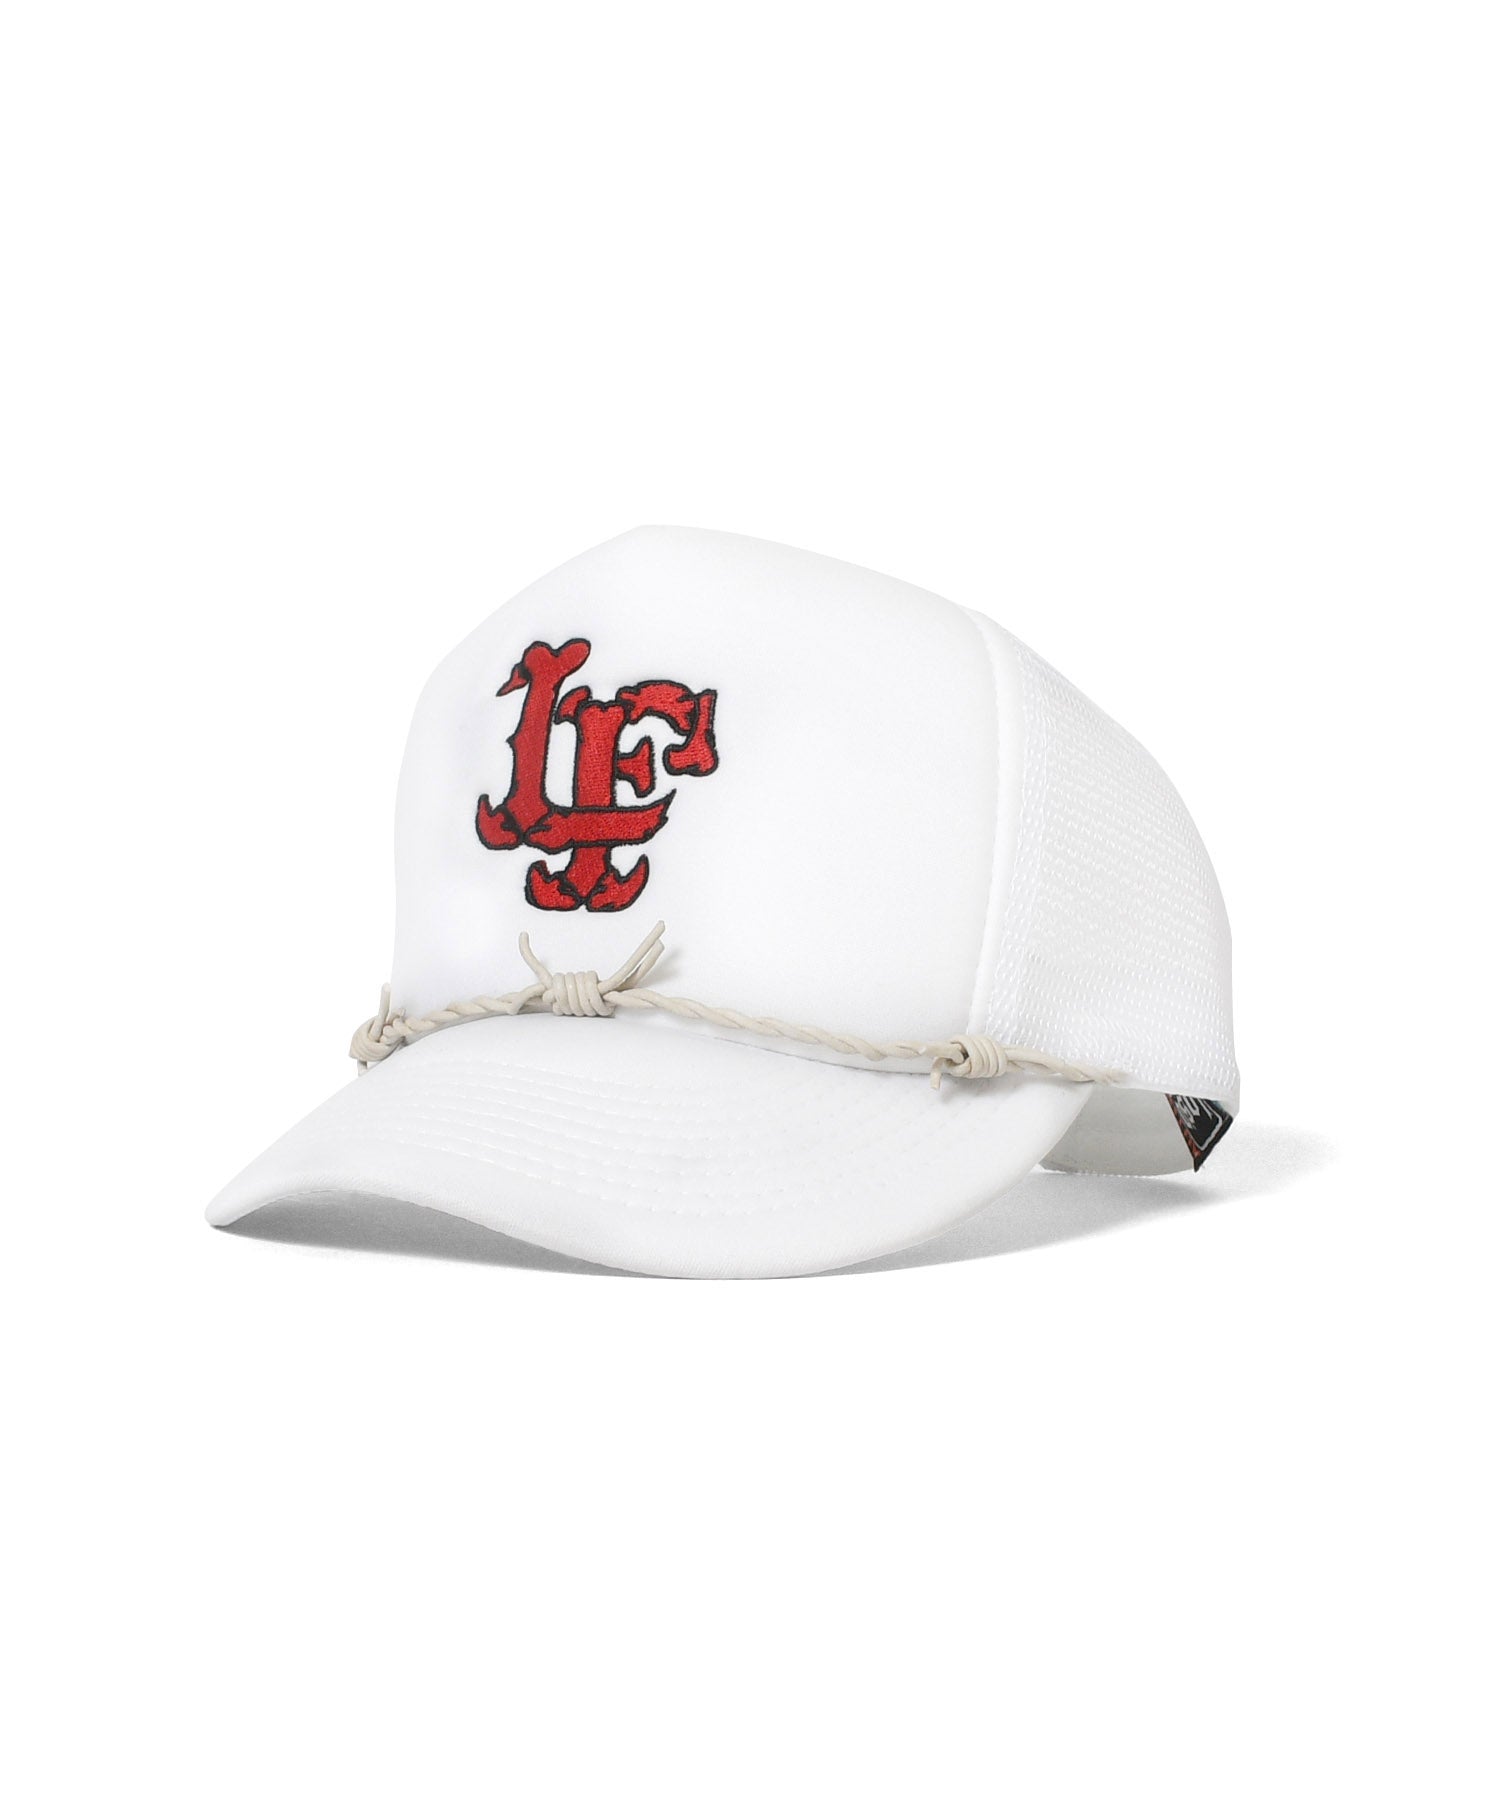 LFYT x Loso Trucker Hat